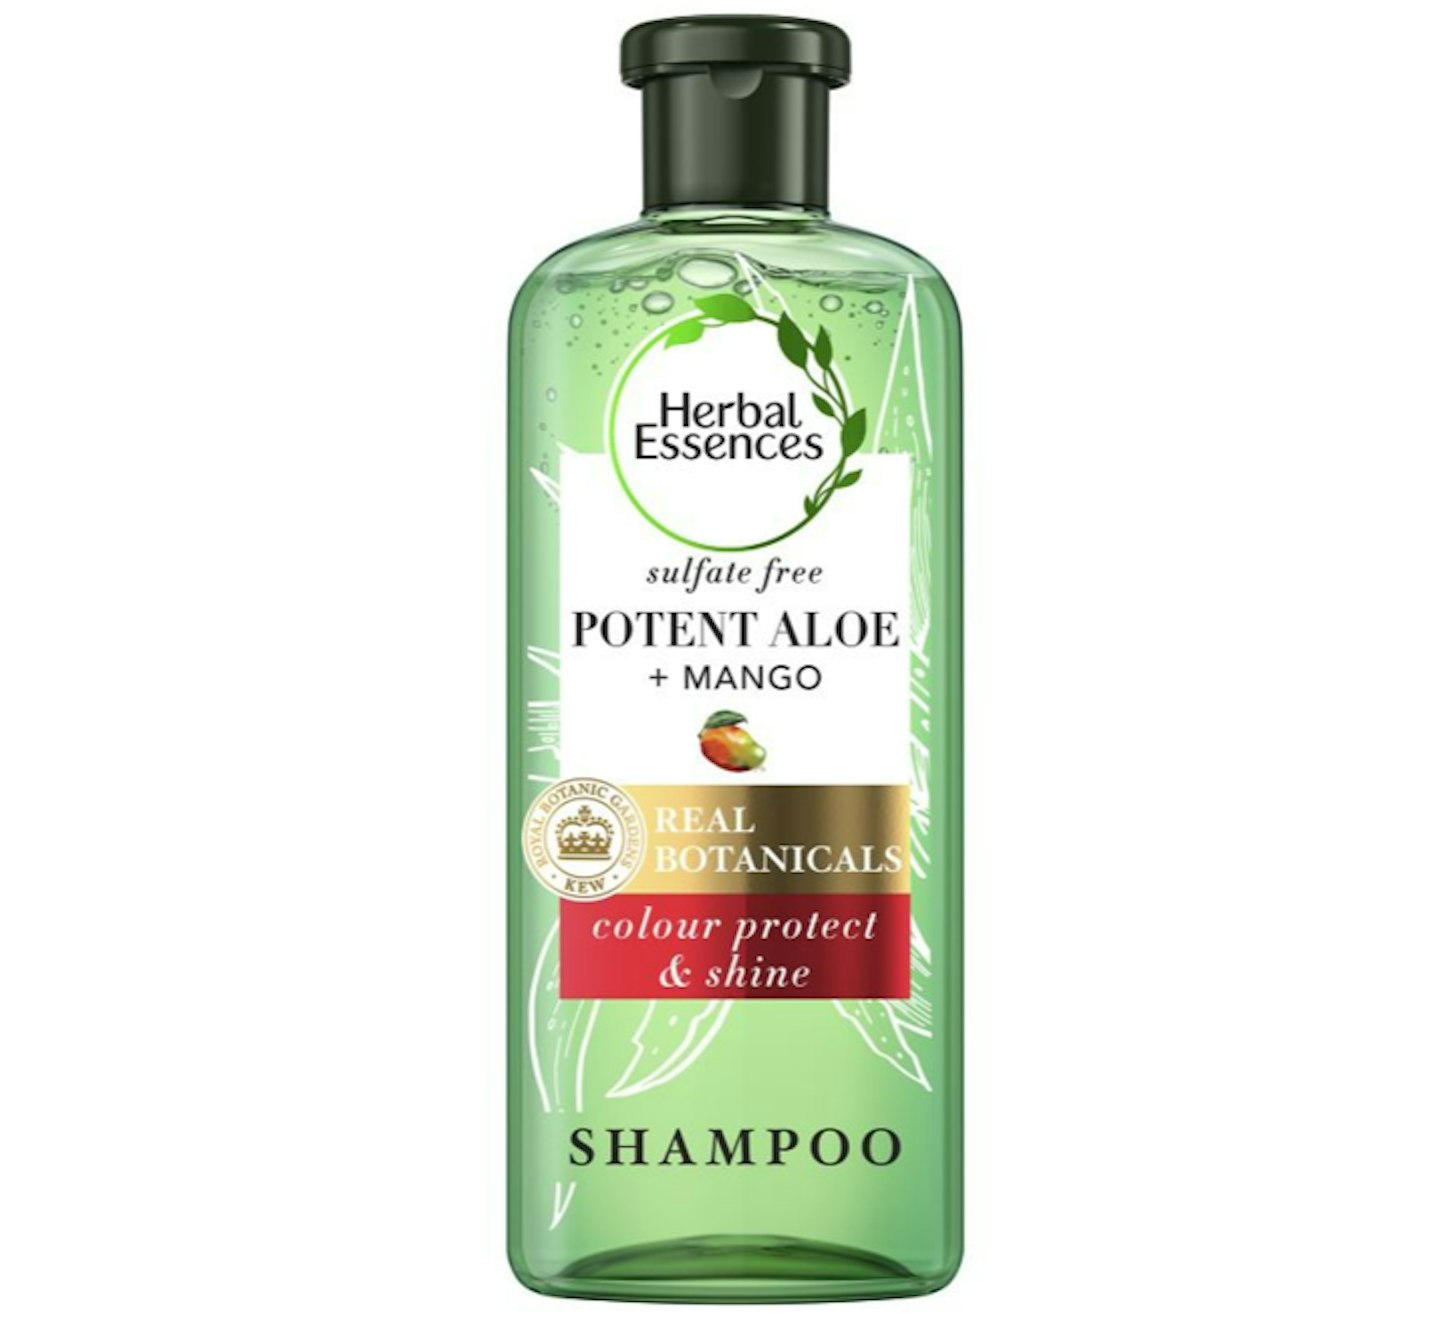 Herbal Essences Bio:Renew Sulfate Free Shampoo With Potent Aloe + Mango